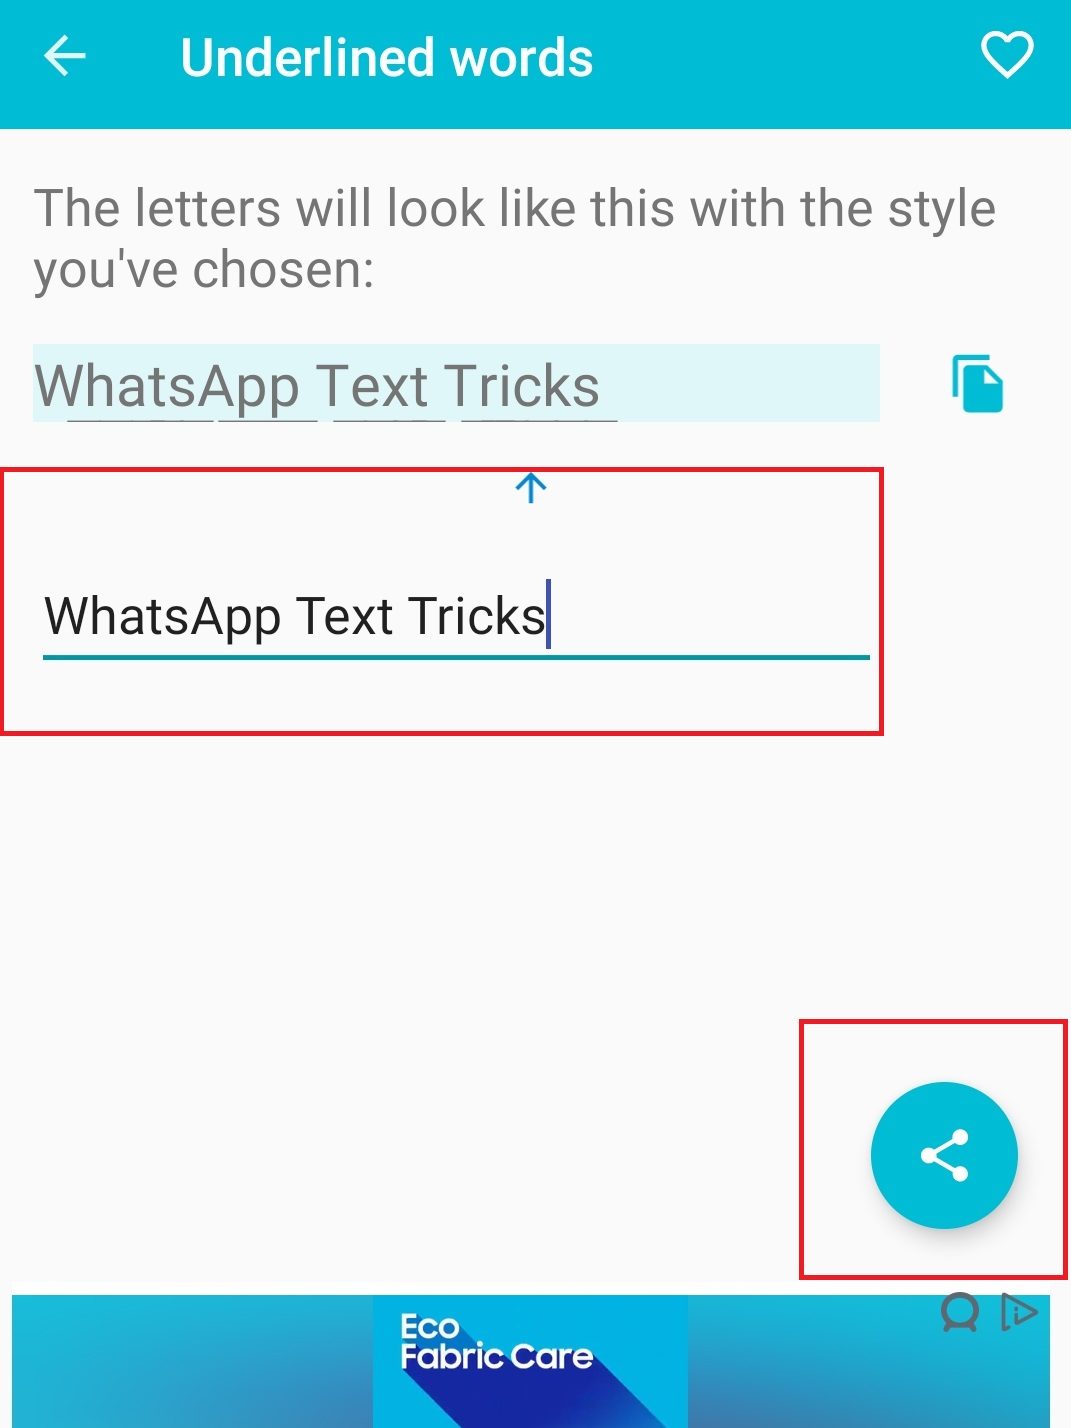 WhatsApp Text Tricks  - Share Underlined Text 